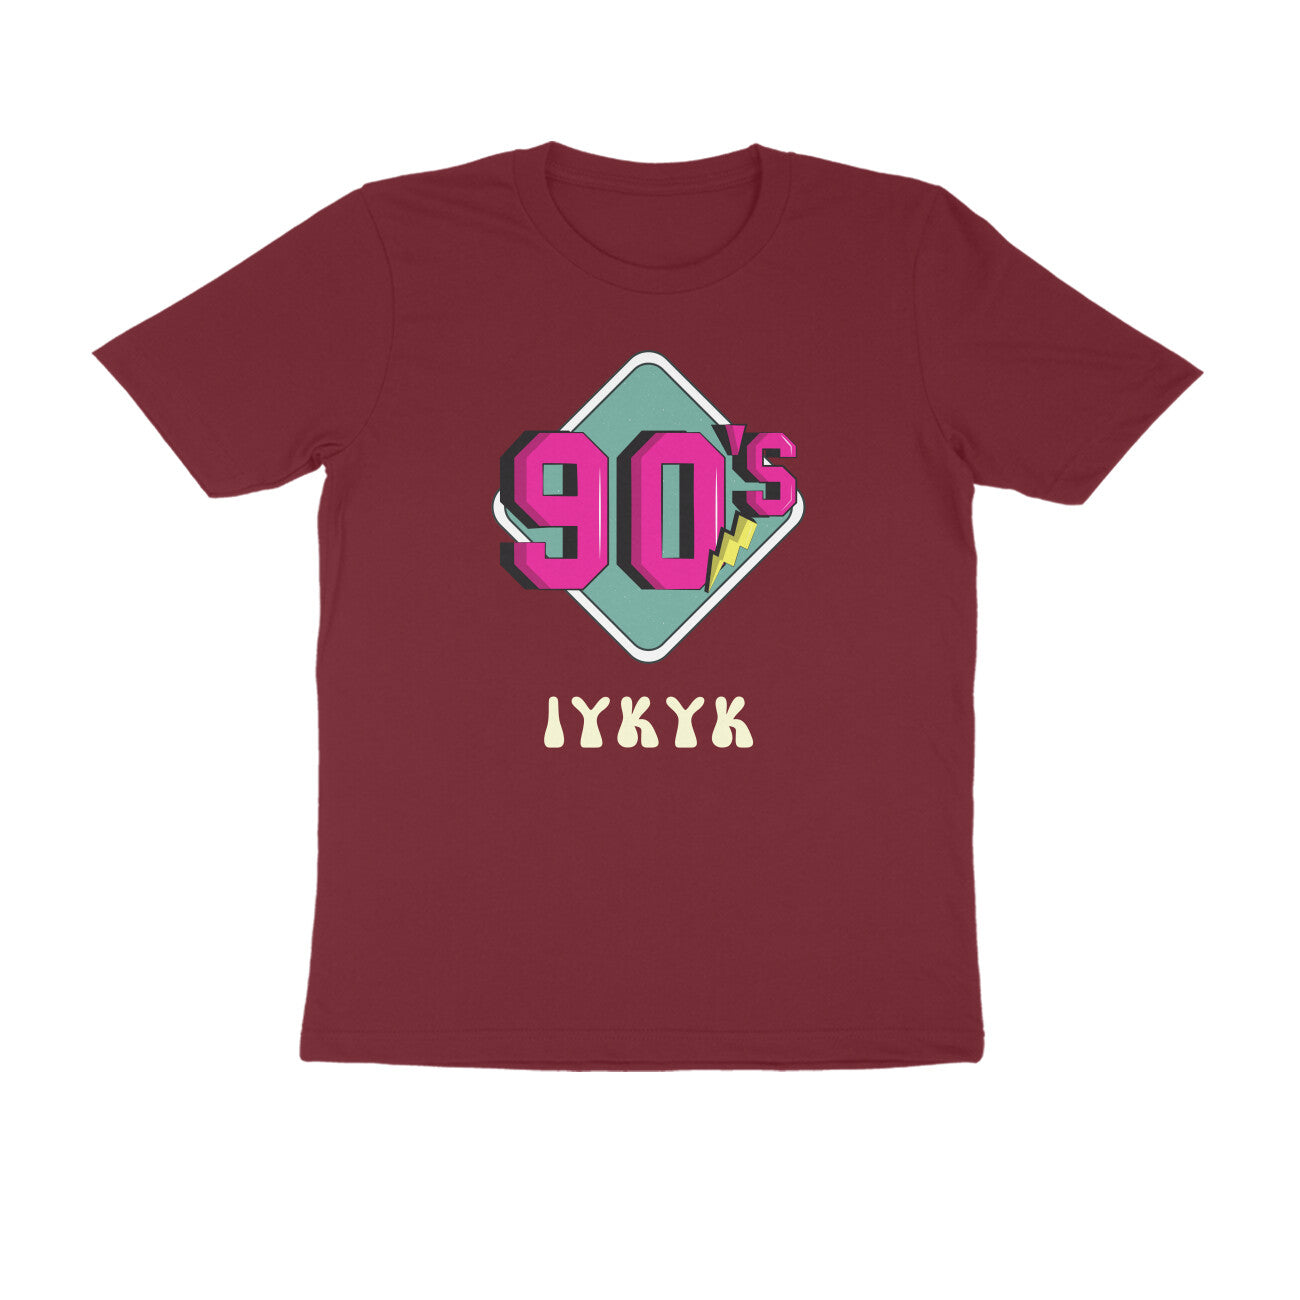 Bilkool 90s IYKYK Cotton Half Sleeve T-Shirt